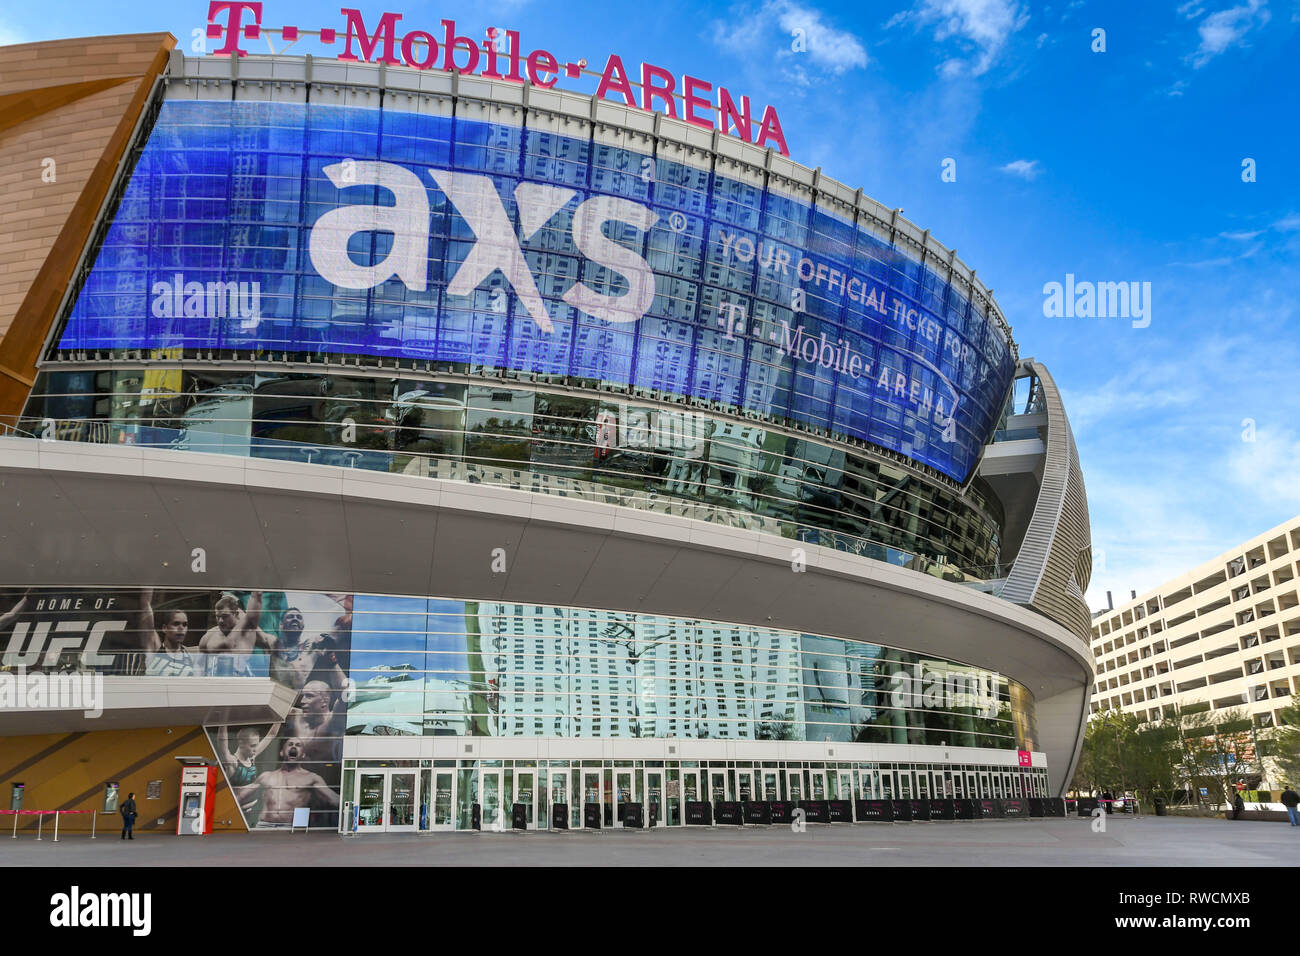 T-Mobile Arena, Las Vegas, USA - Stock Image - C036/0934 - Science